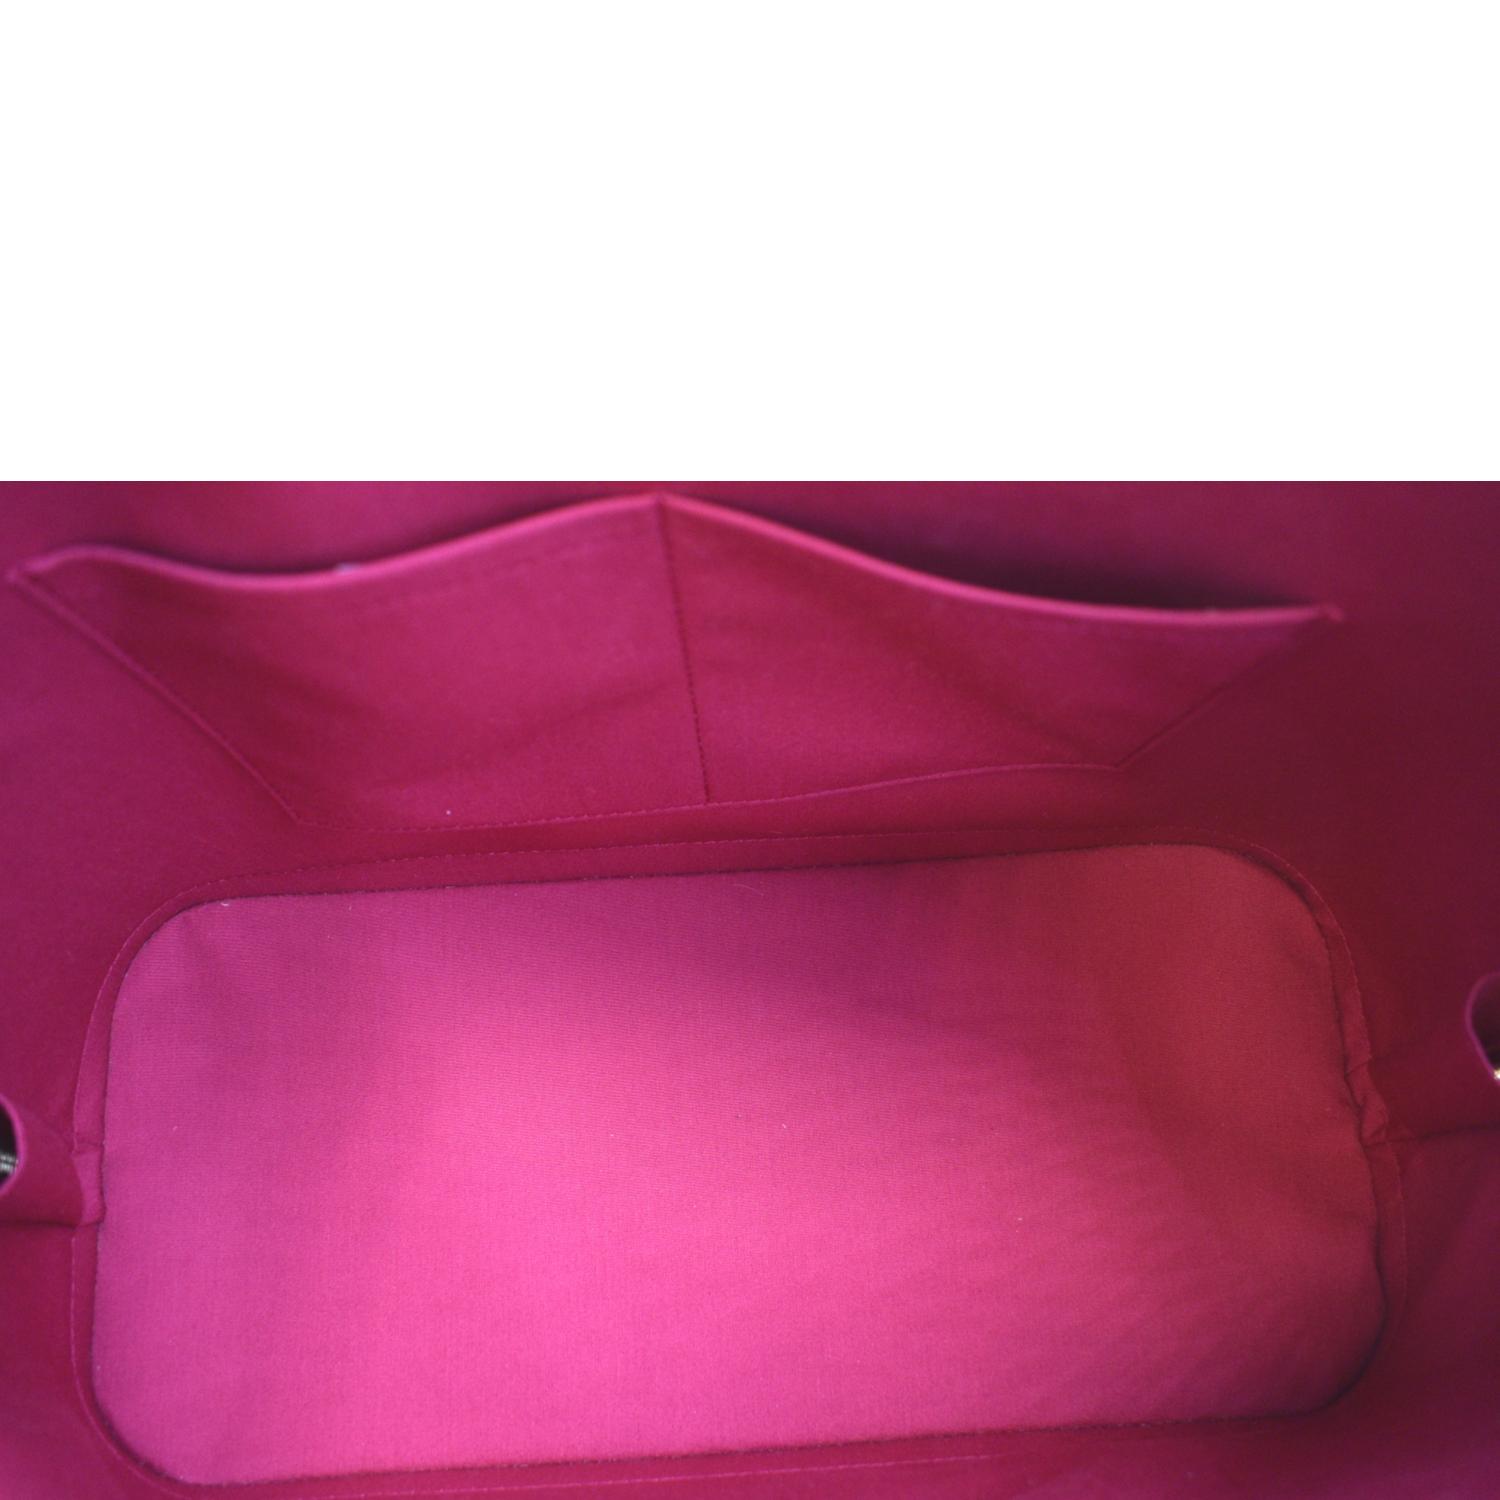 LOUIS VUITTON Alma GM Monogram Vernis Leather Satchel Bag Pink